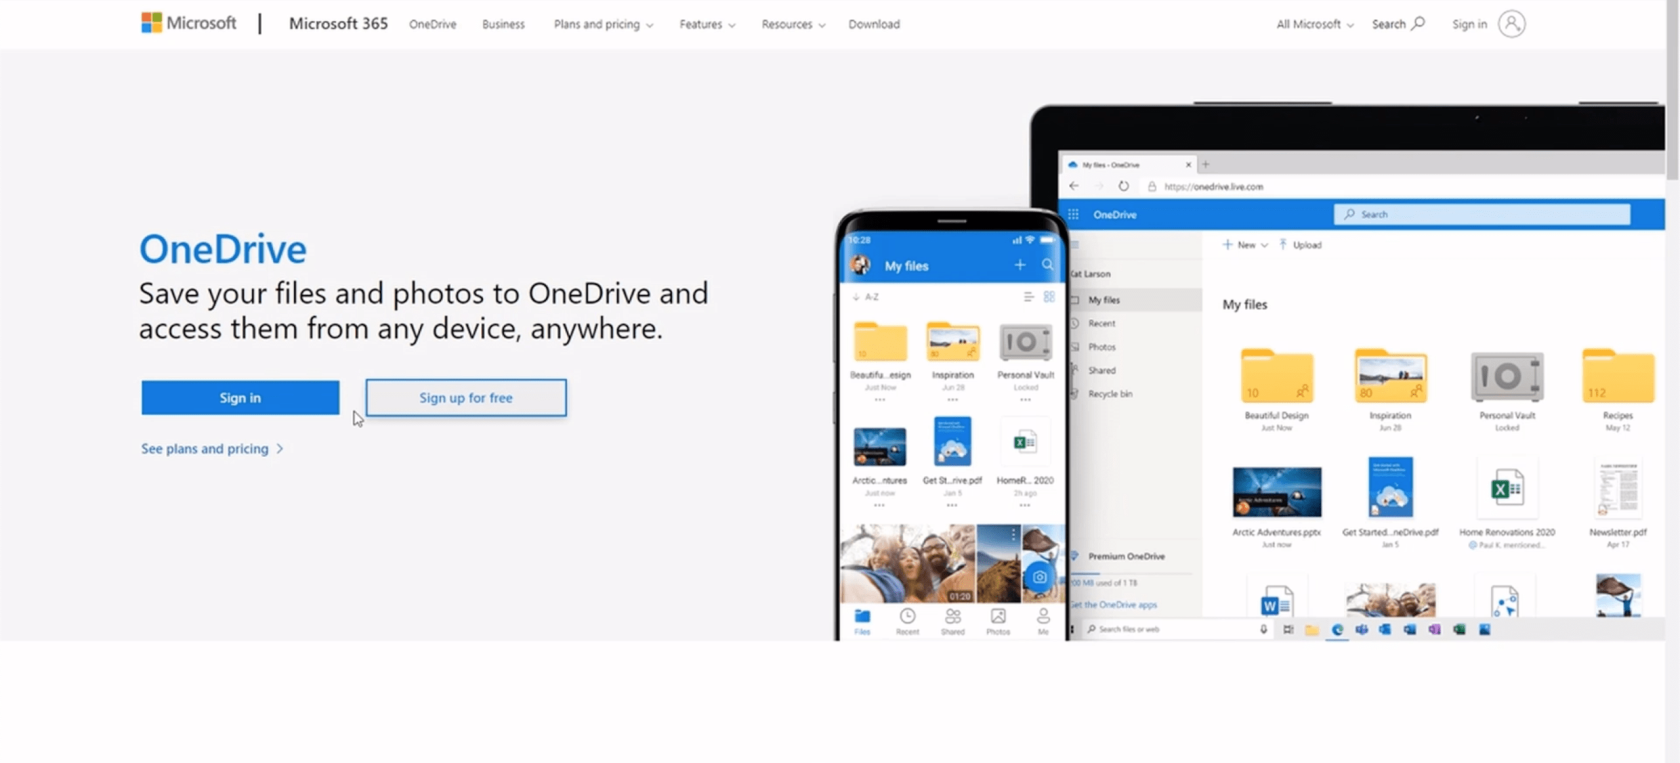 Configuración del entorno de Power Apps: Conéctese a OneDrive y Google Drive